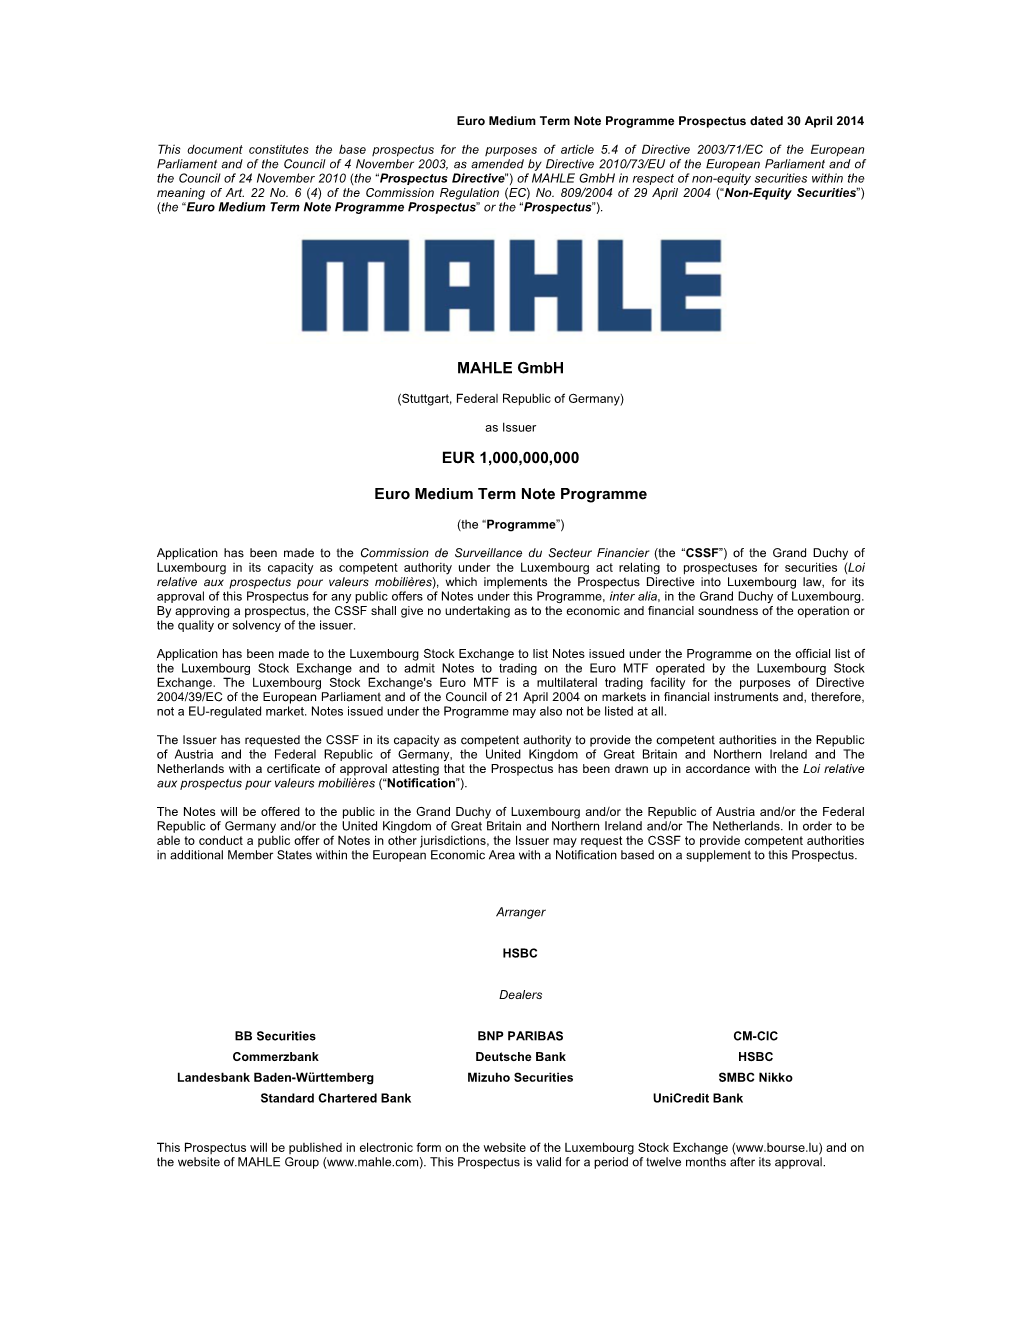 MAHLE Gmbh EUR 1,000,000,000 Euro Medium Term Note Programme